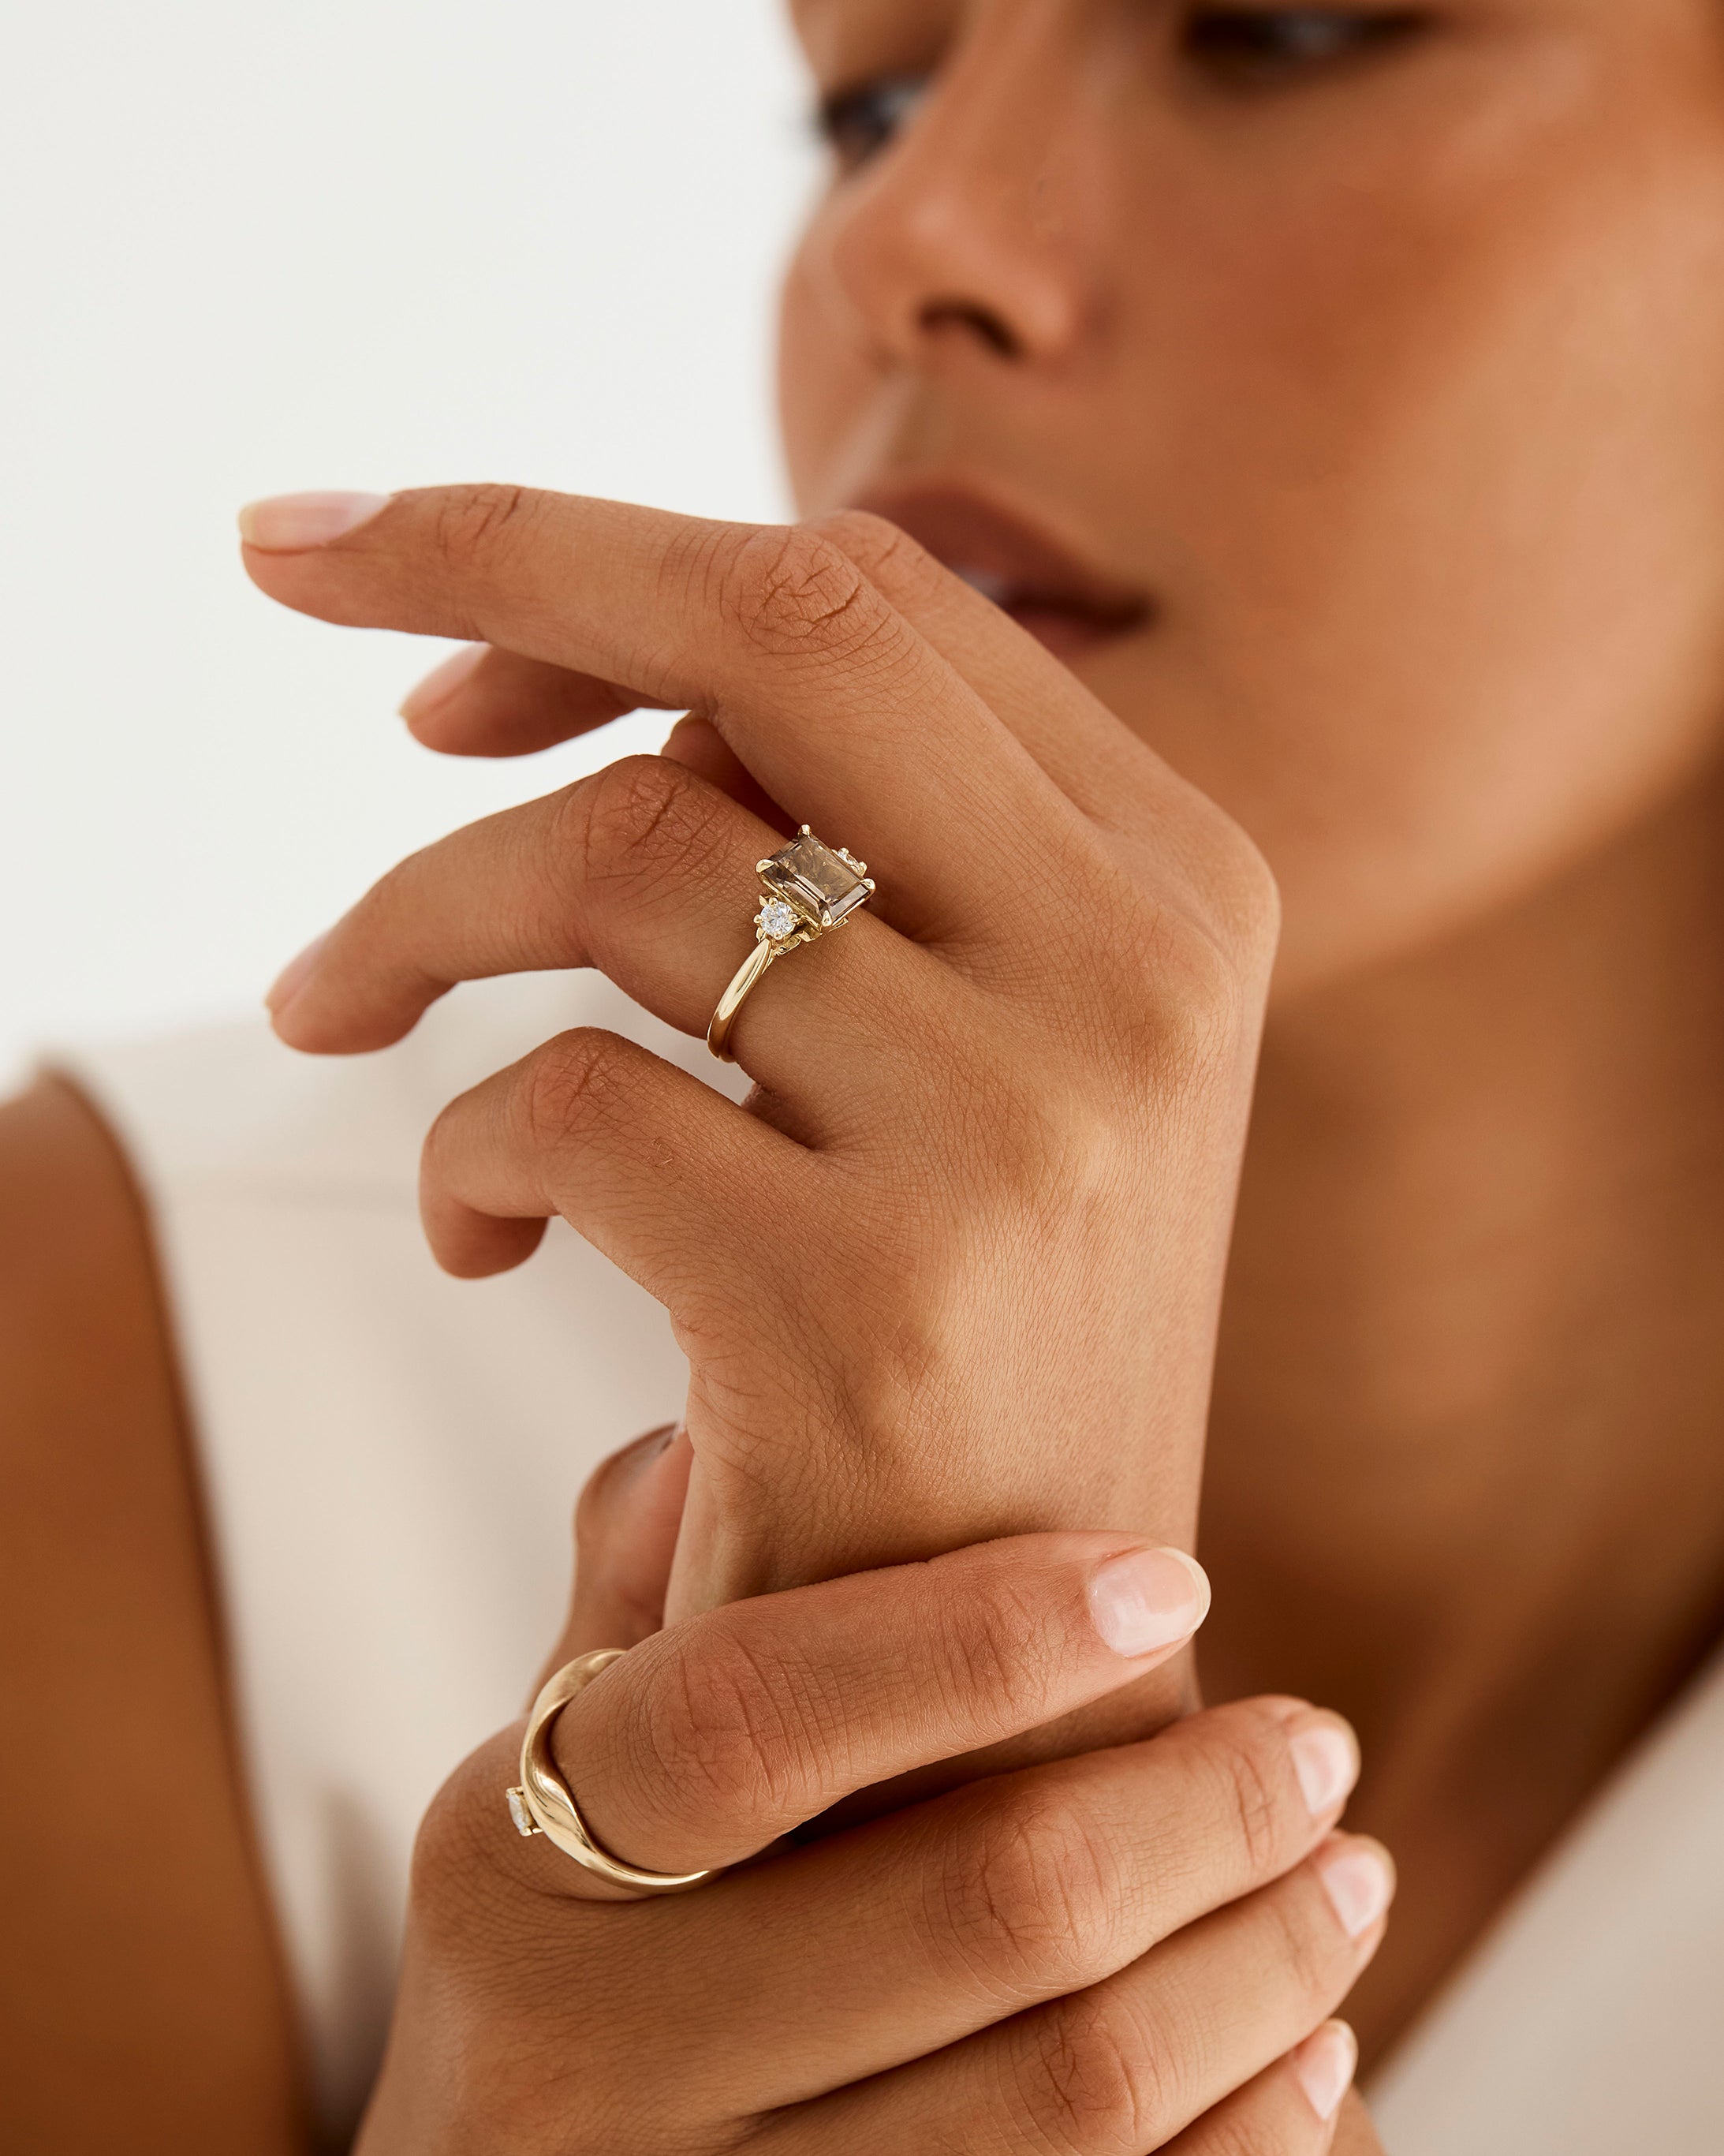 A model wears an emerald cut trio ring featuring petite diamonds and a central smokey quartz